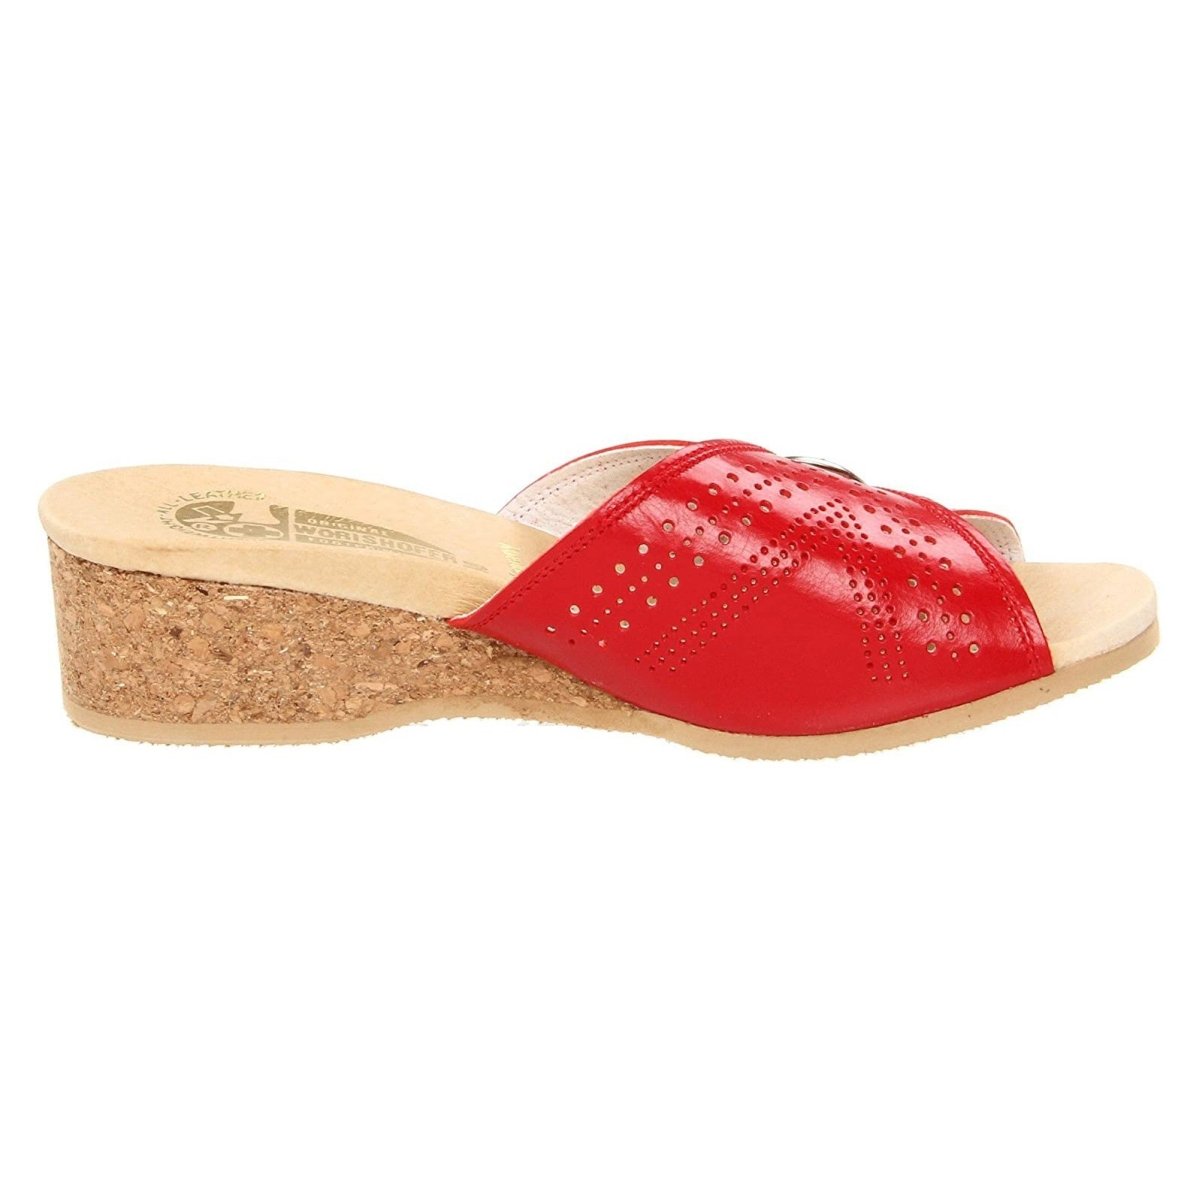 Worishofer Women's 251 Slide RED Leather